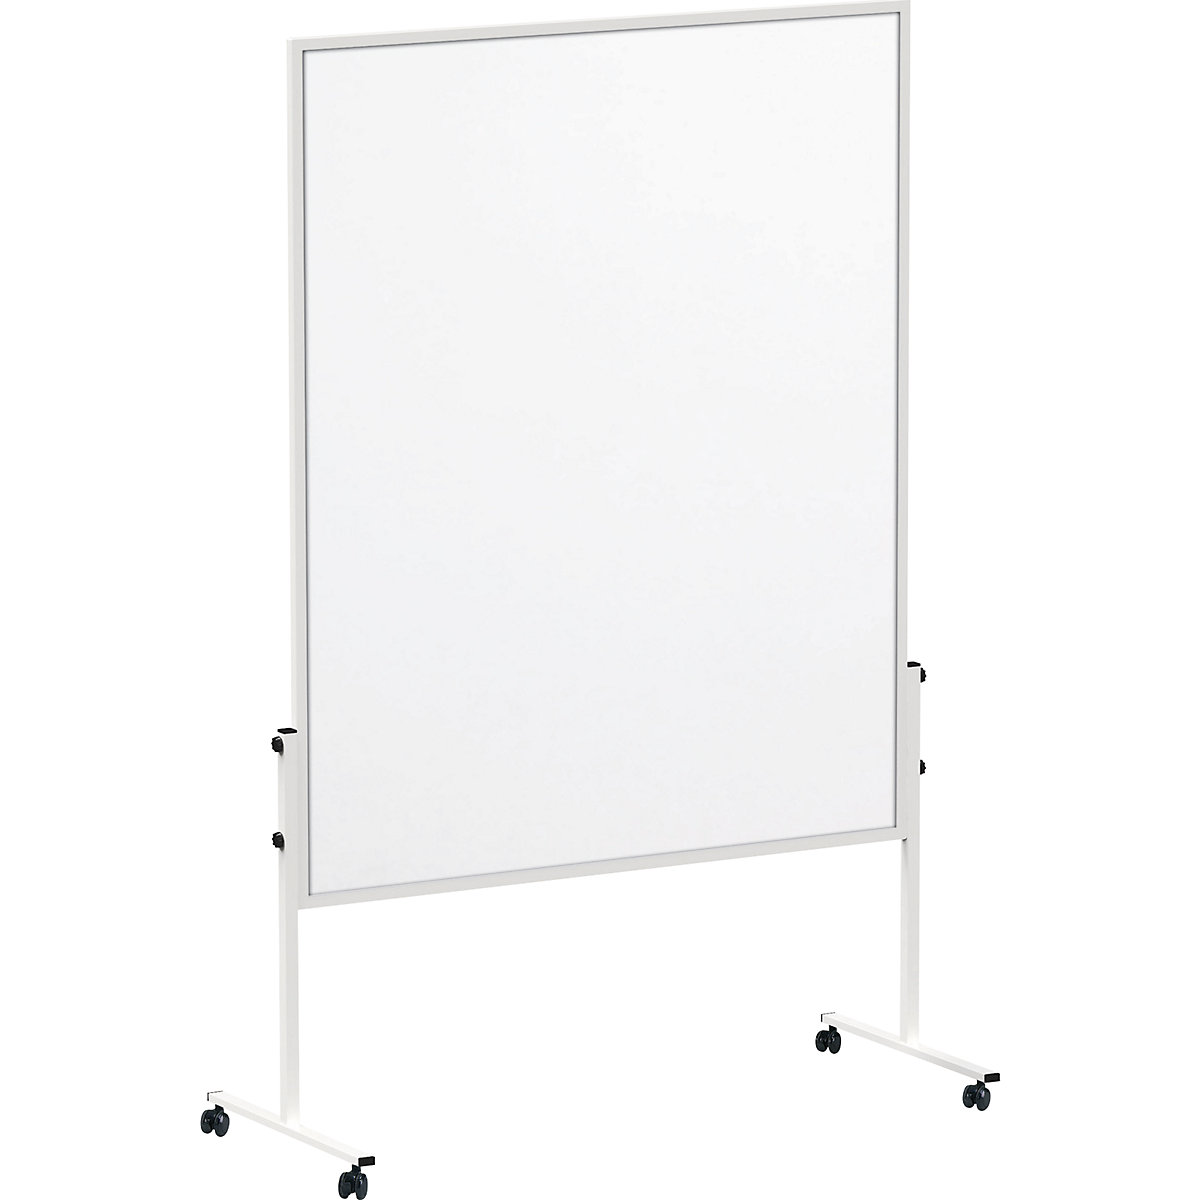 MAULsolid presentation board – MAUL, mobile, whiteboard surface white-1